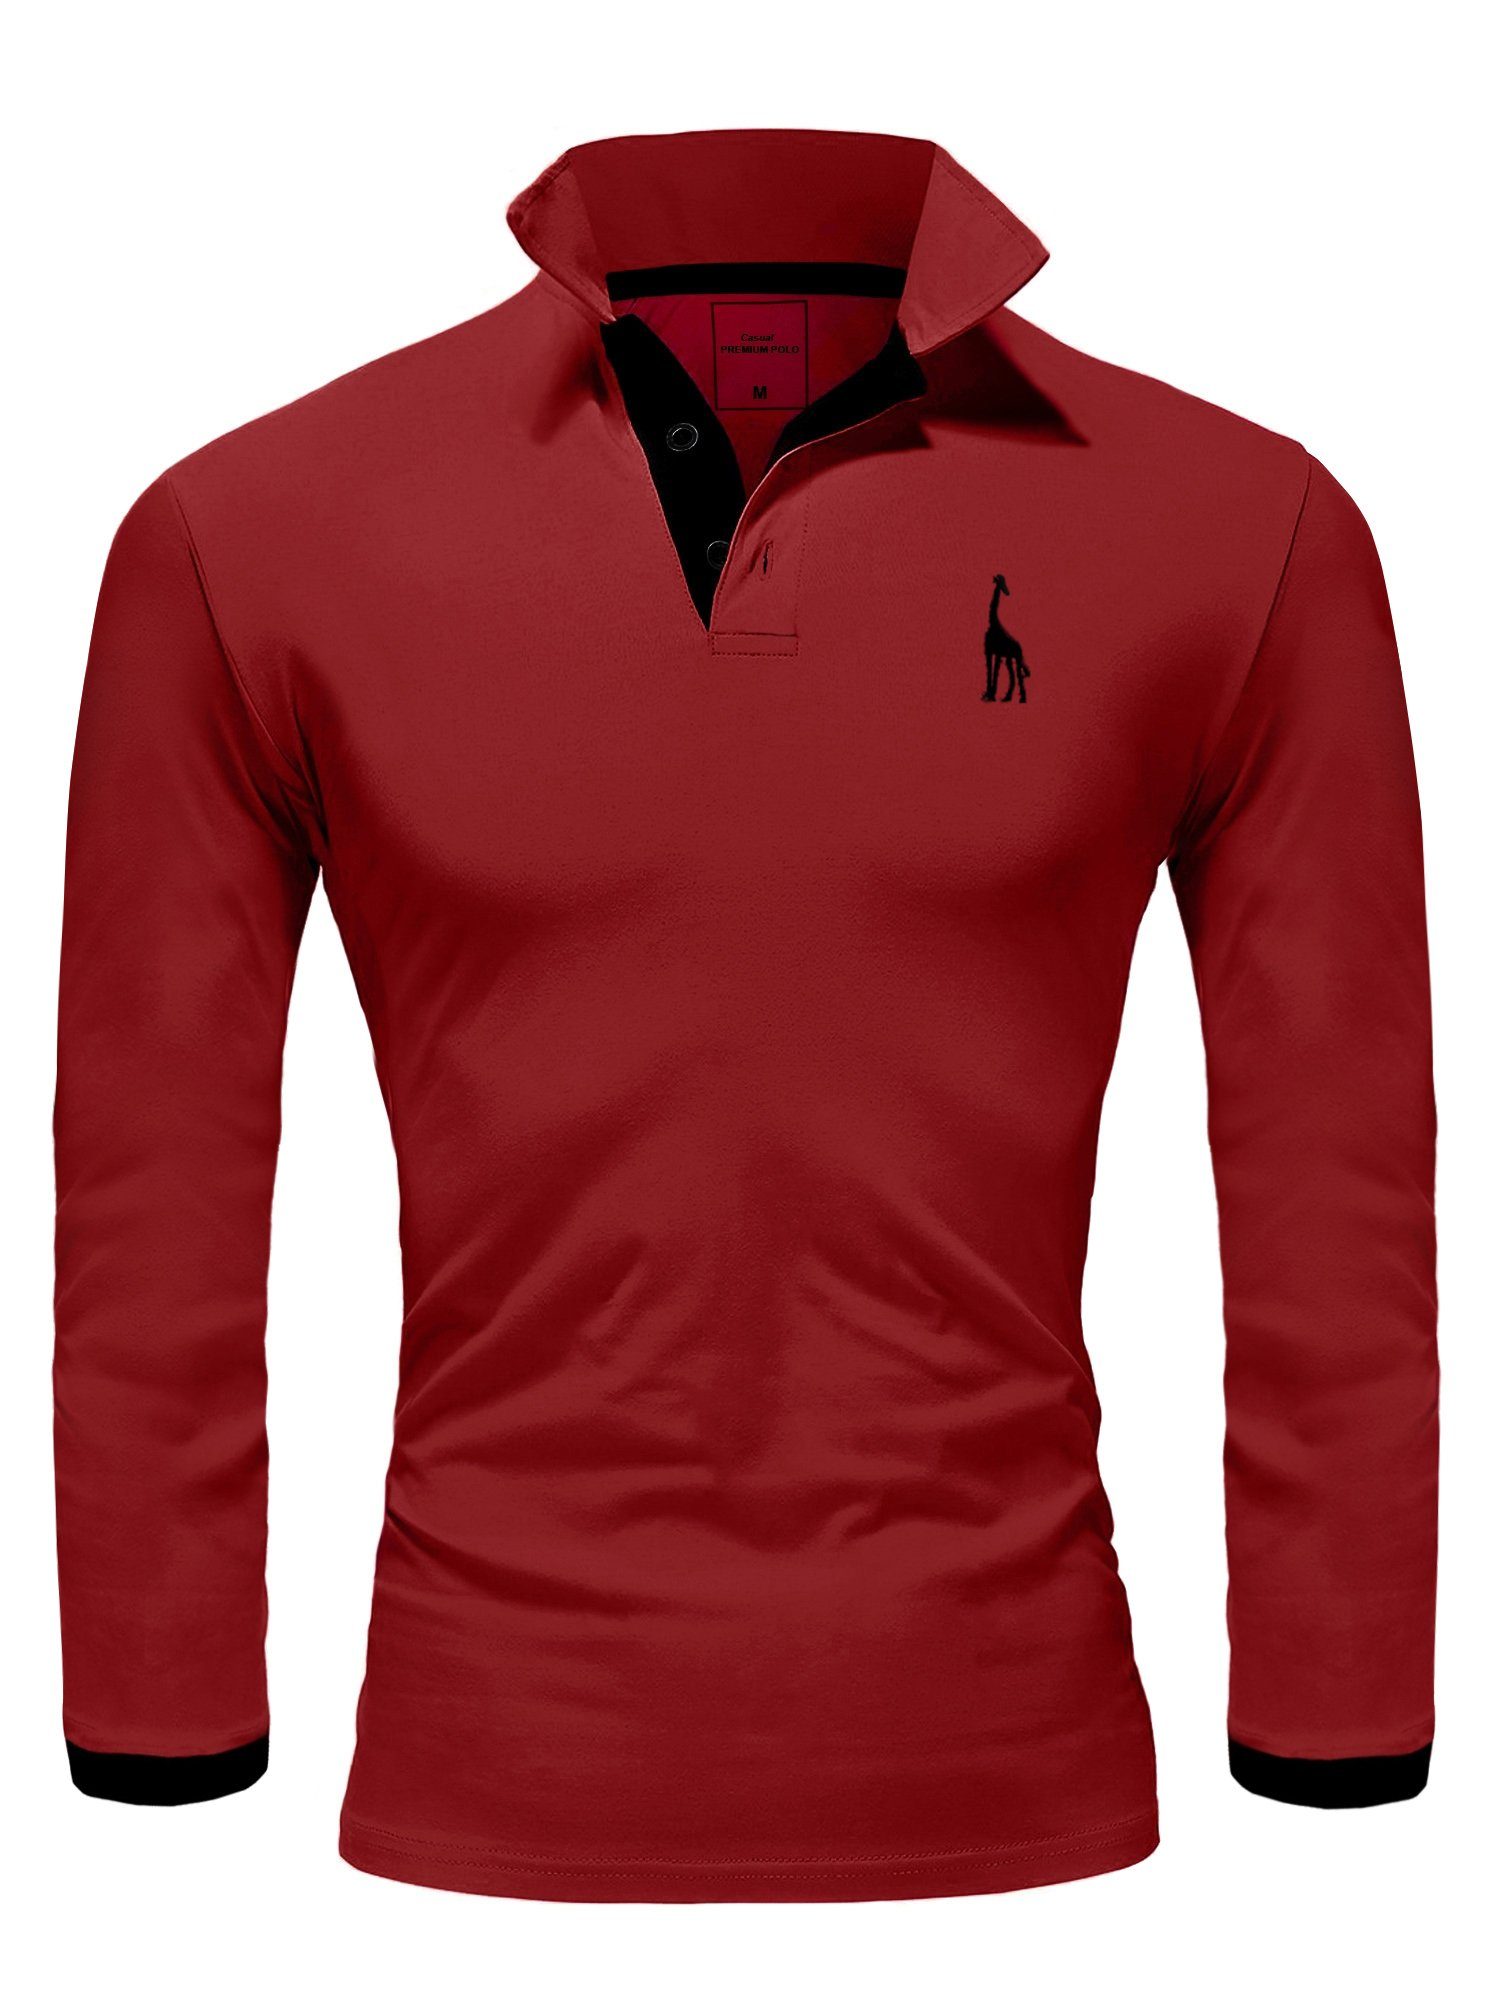 REPUBLIX Poloshirt AIDEN Herren Basic Langarm Kontrast Polo Hemd Bordeaux/Schwarz